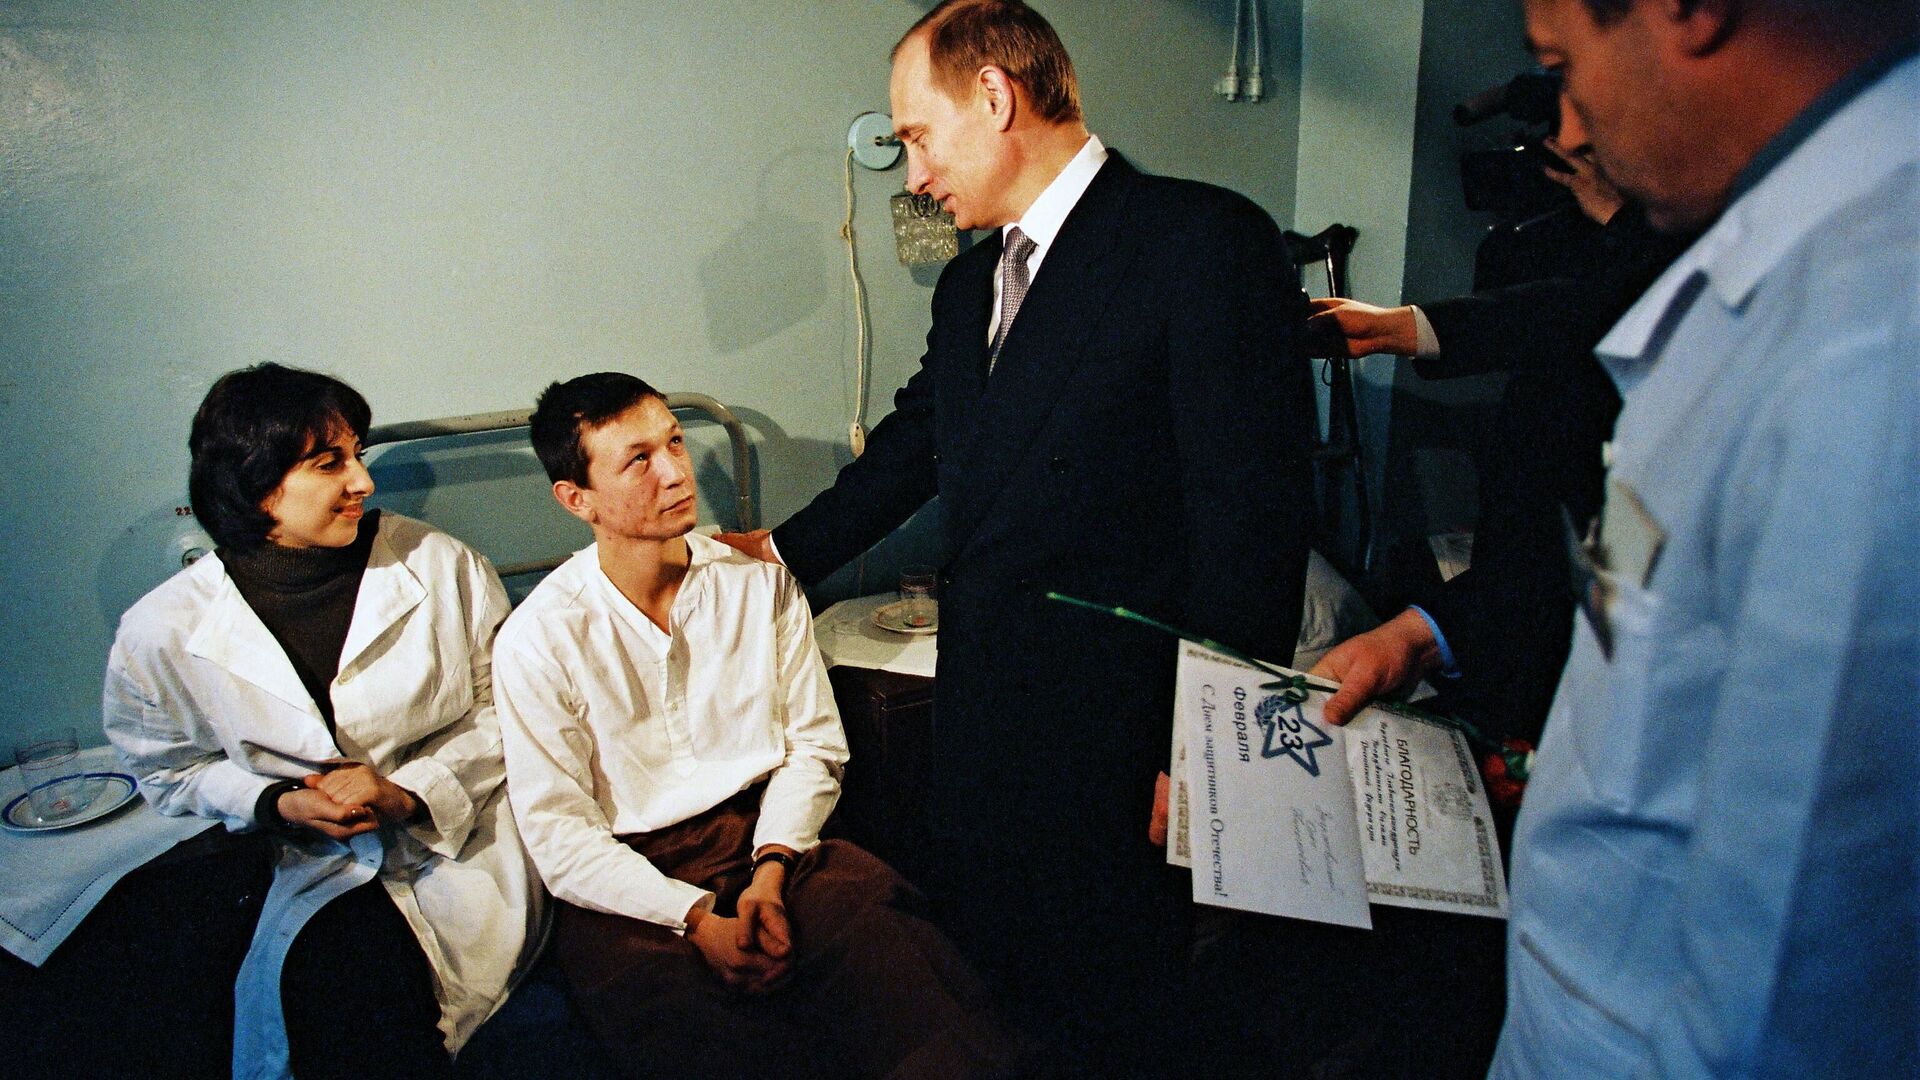 Fotografiя Vladimira Putina v Volgogradskom voennom garnizonnom gospitale - Sputnik Srbija, 1920, 12.12.2021